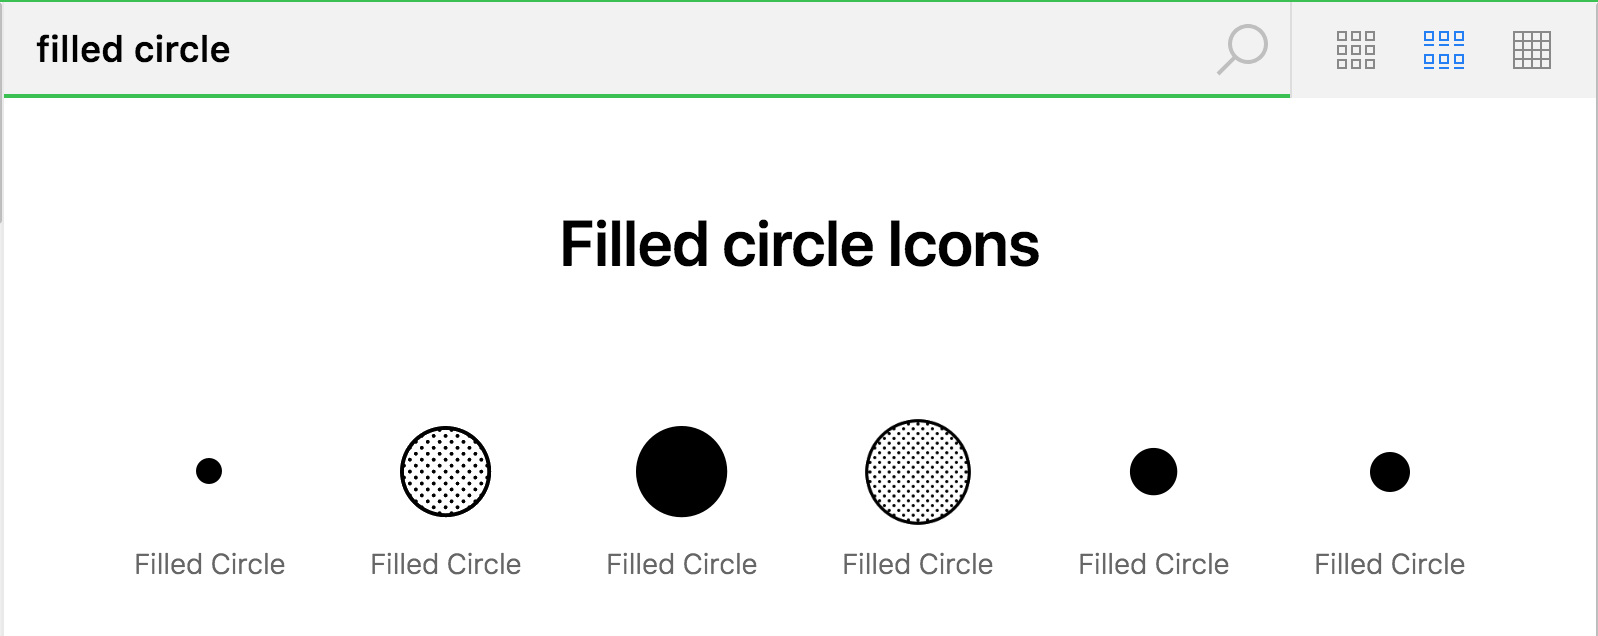 filled circle icons